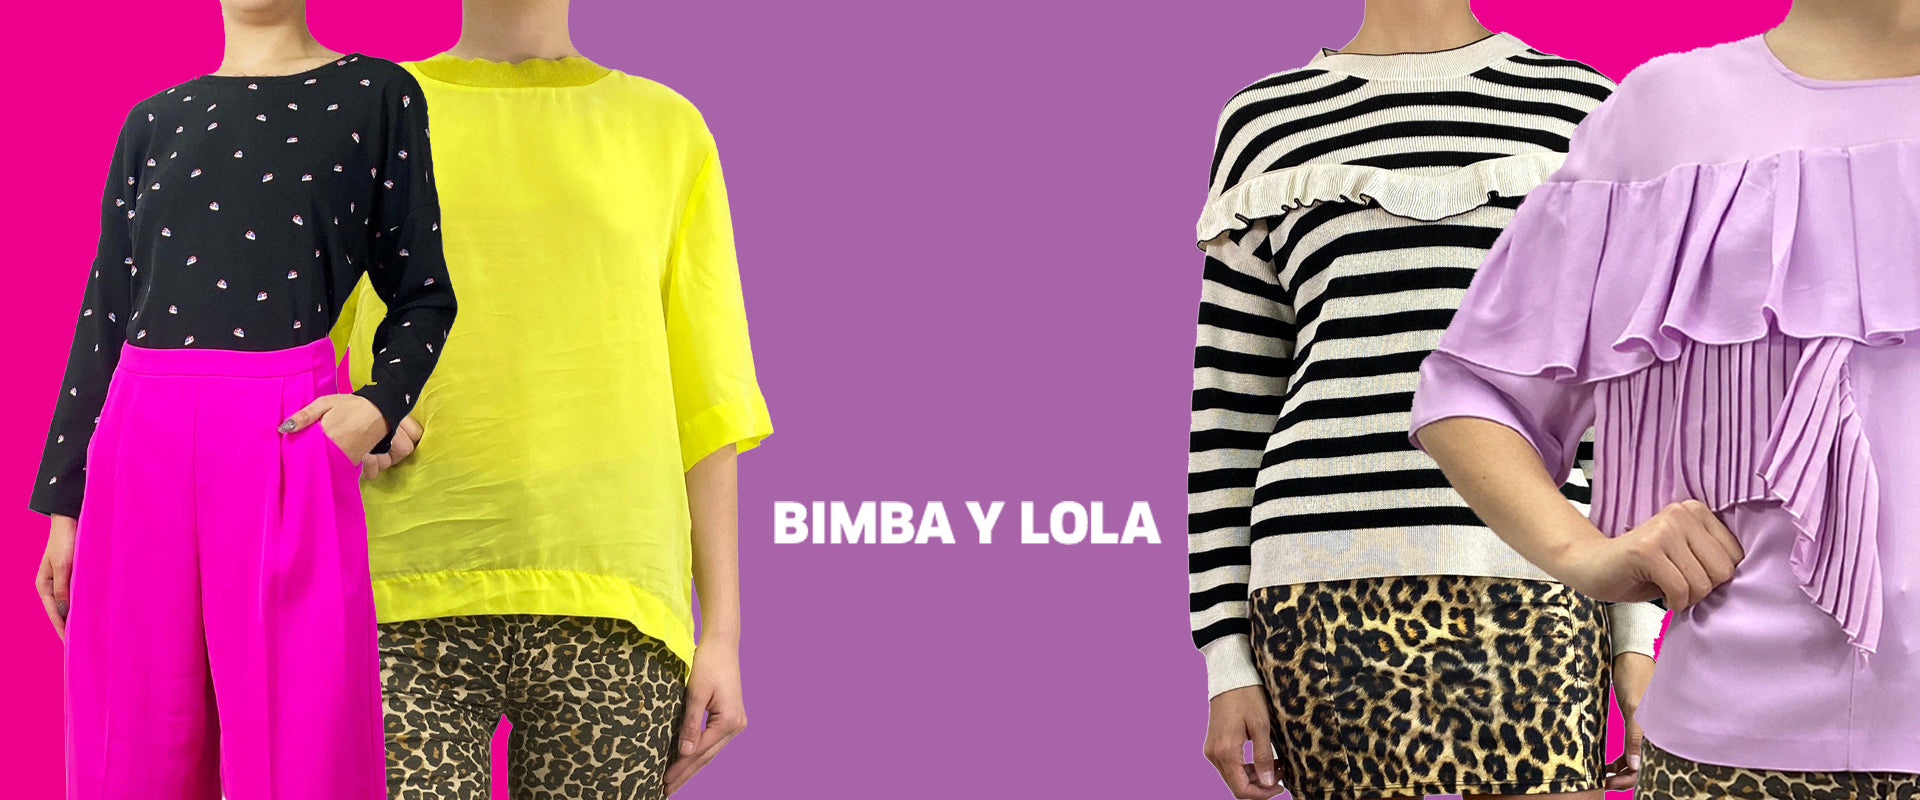 BIMBA Y LOLA – Market People